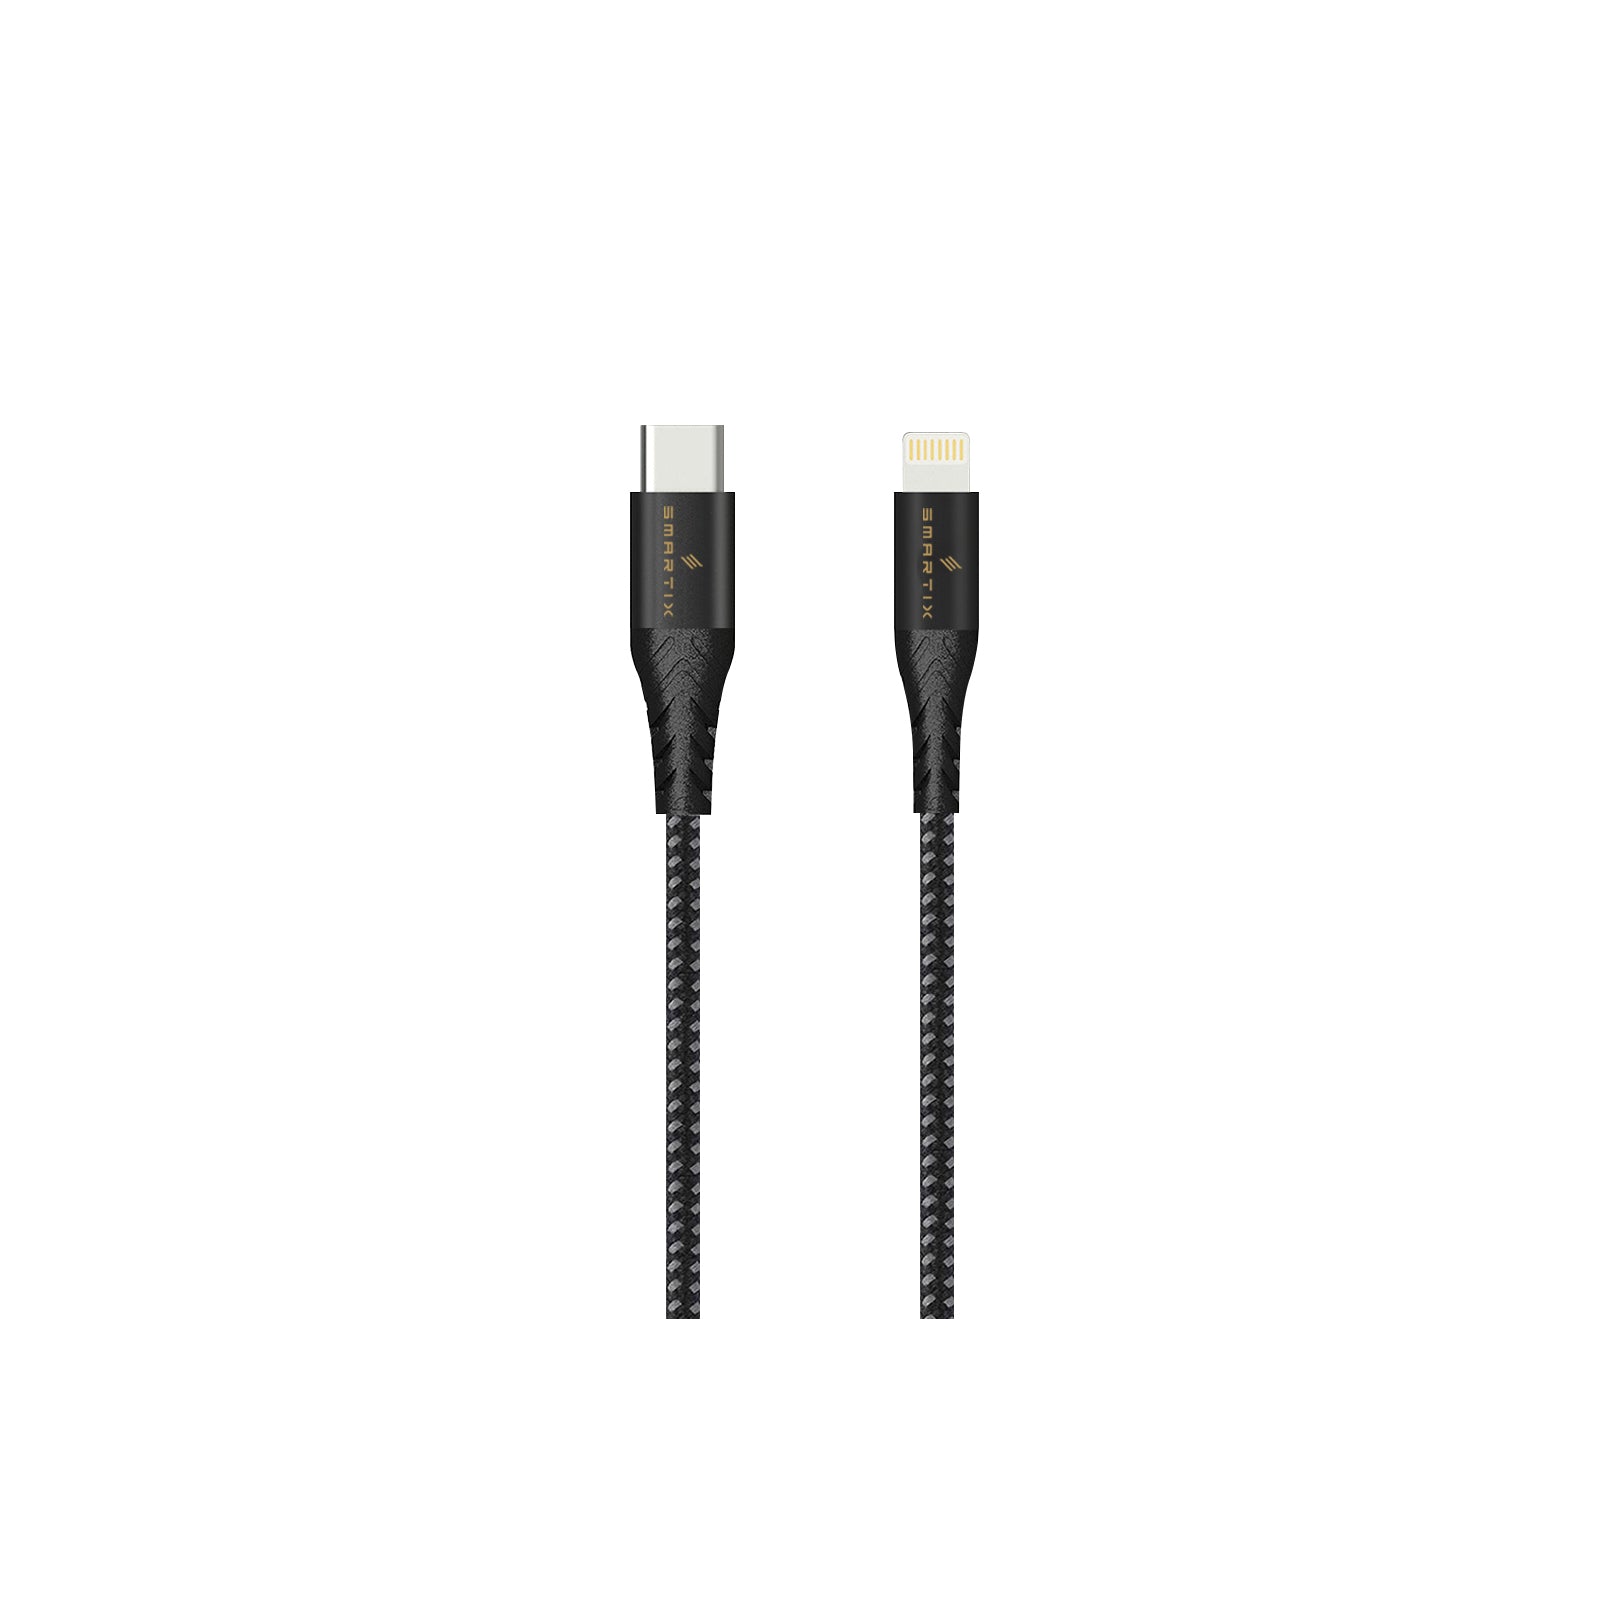 USB-C to Lighting MFI Cable - Smart Infocomm